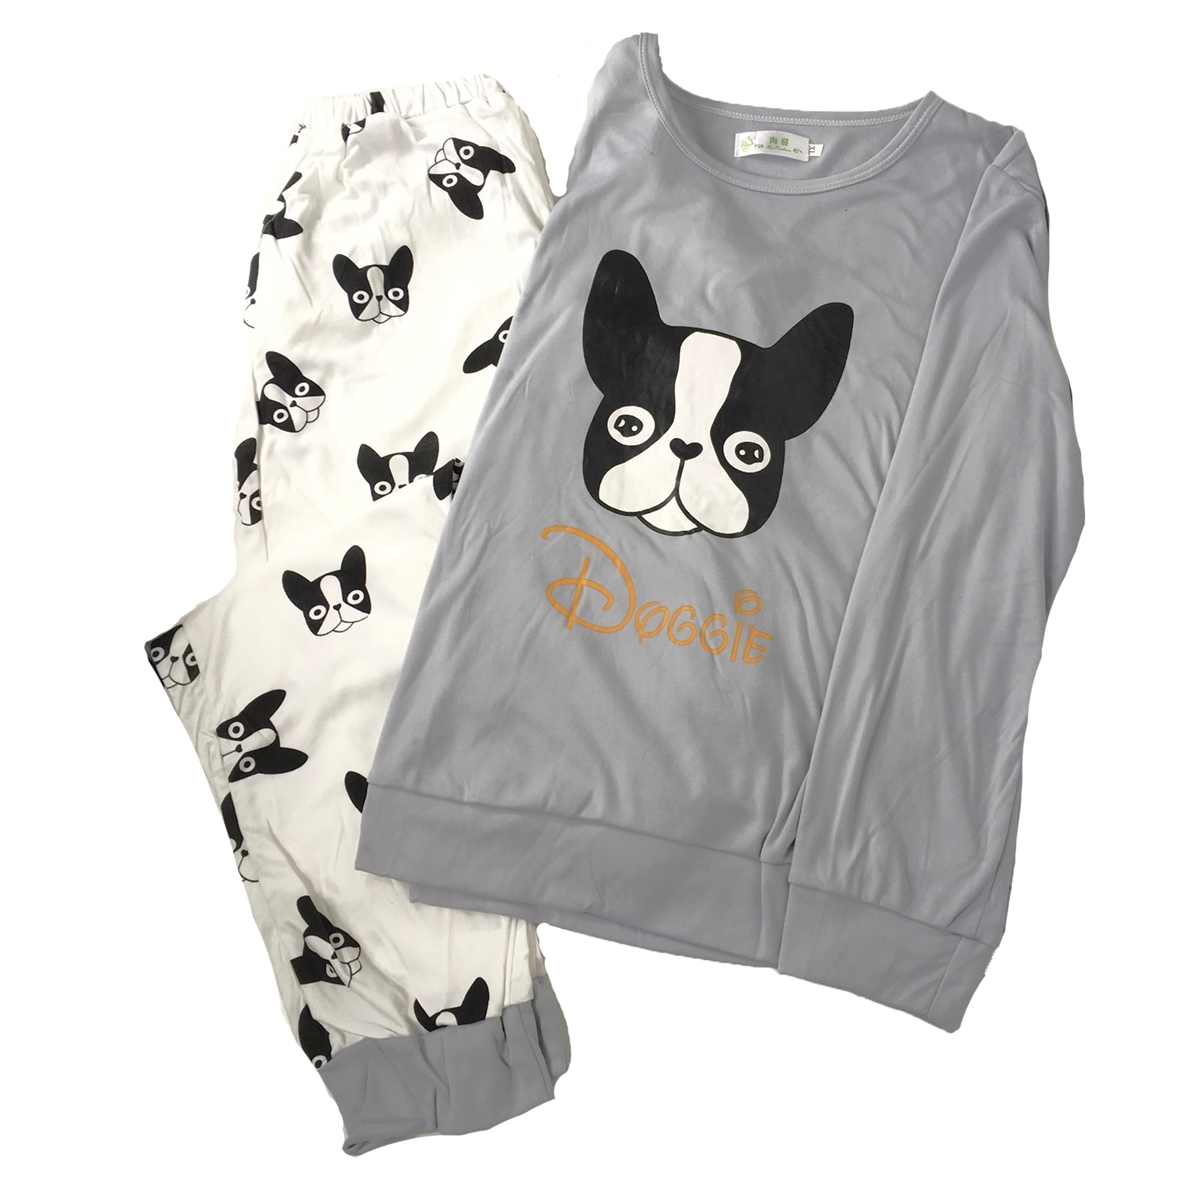 Fashion Culture Boston Terrier Doggie Lounge Pants & Top Set, Grey